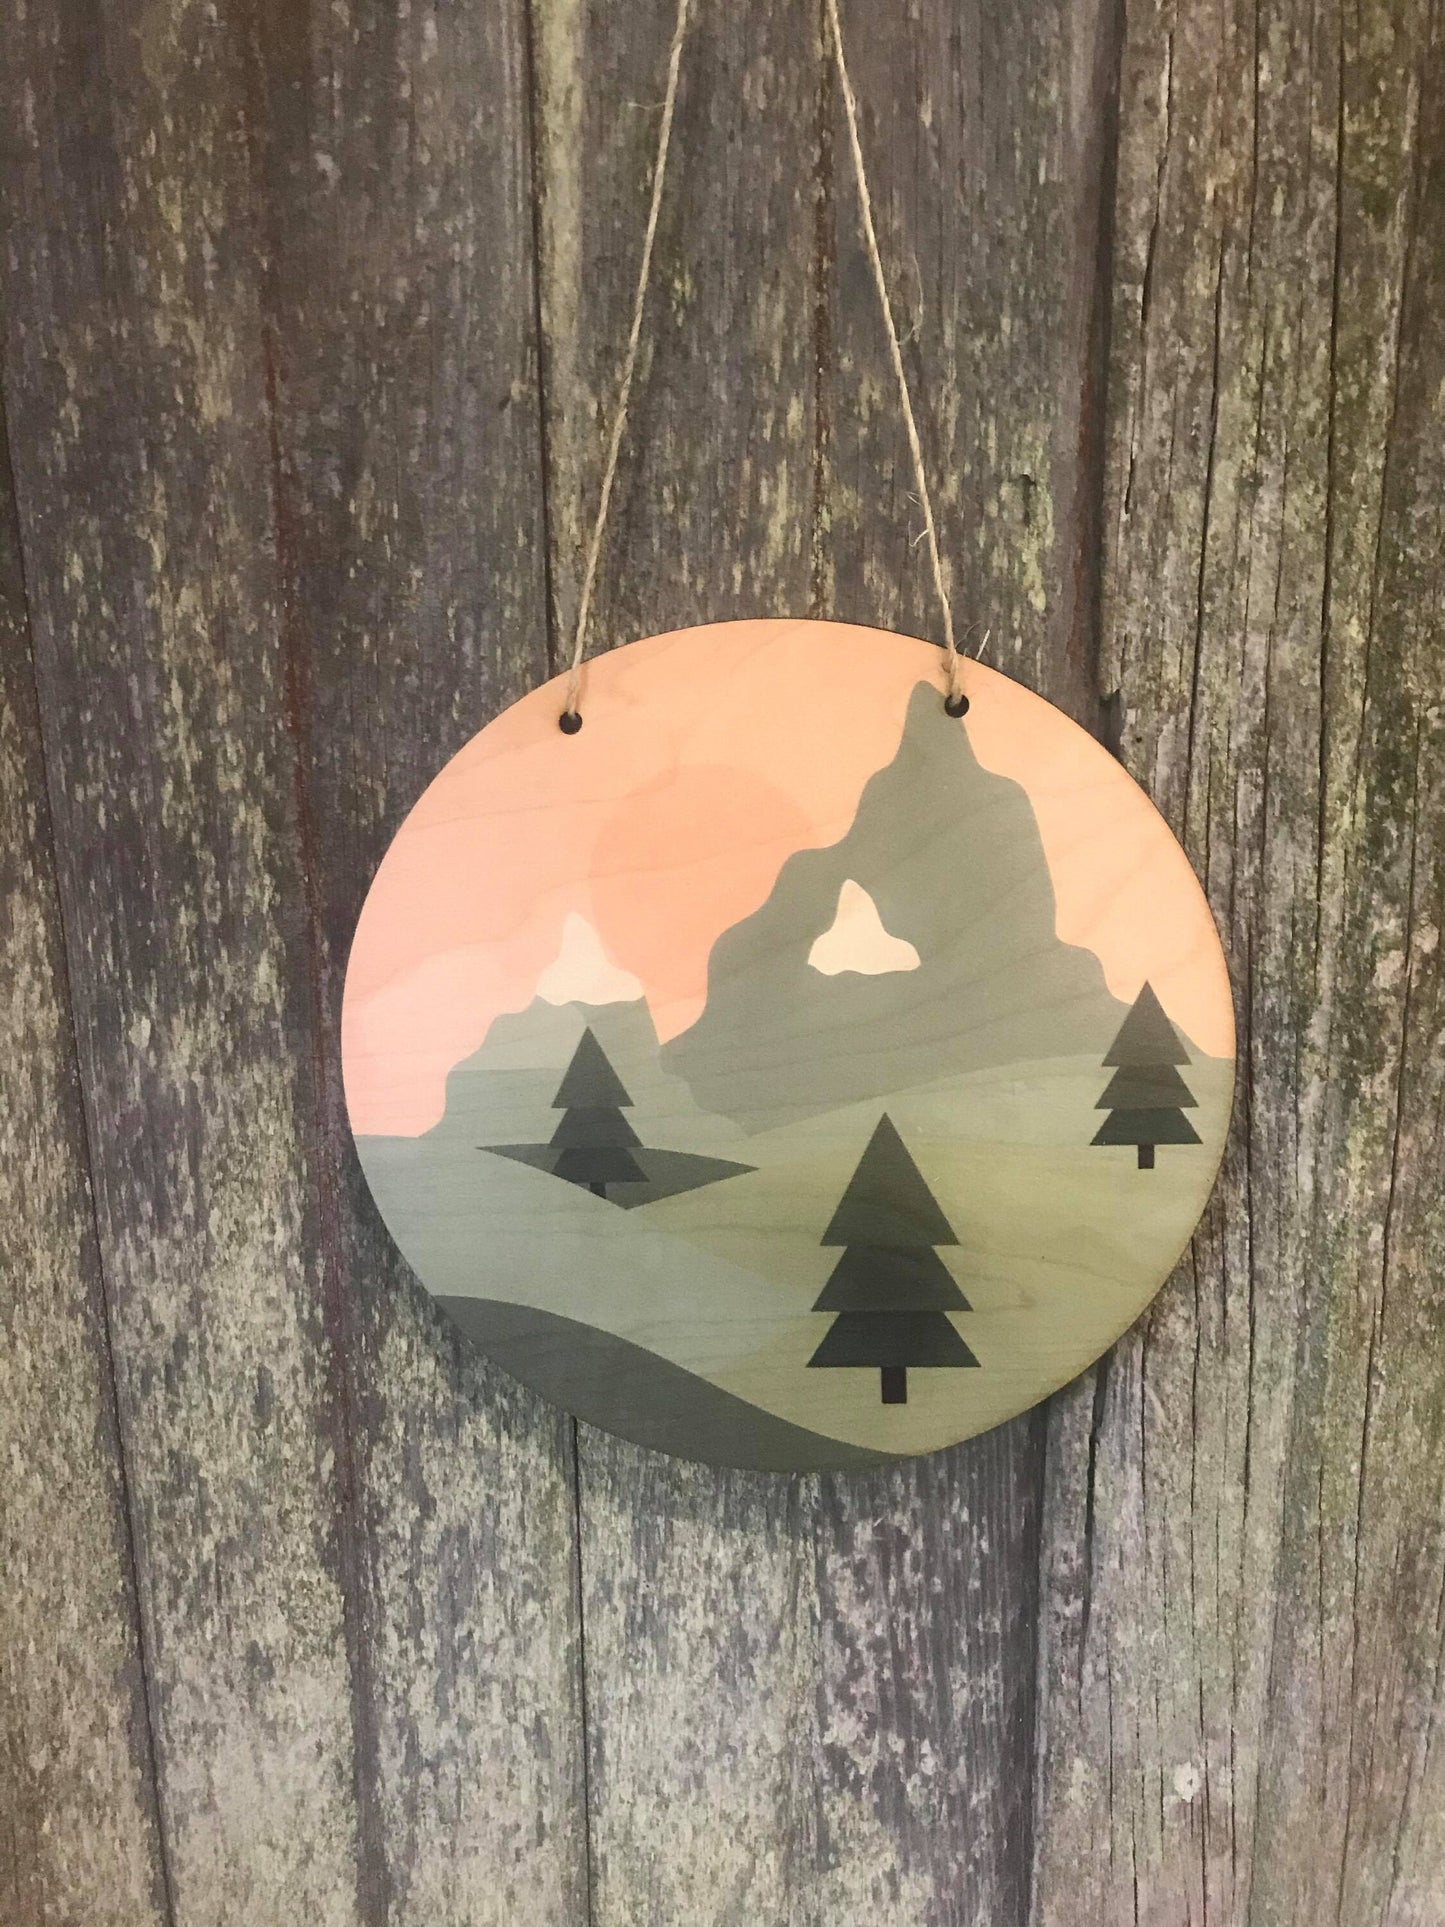 Pine Trees Mountain Sign Round Scenic Wood Sunshine Sky Wall Hanger Nursery Decor Plaque Wall Art Color Wood Print